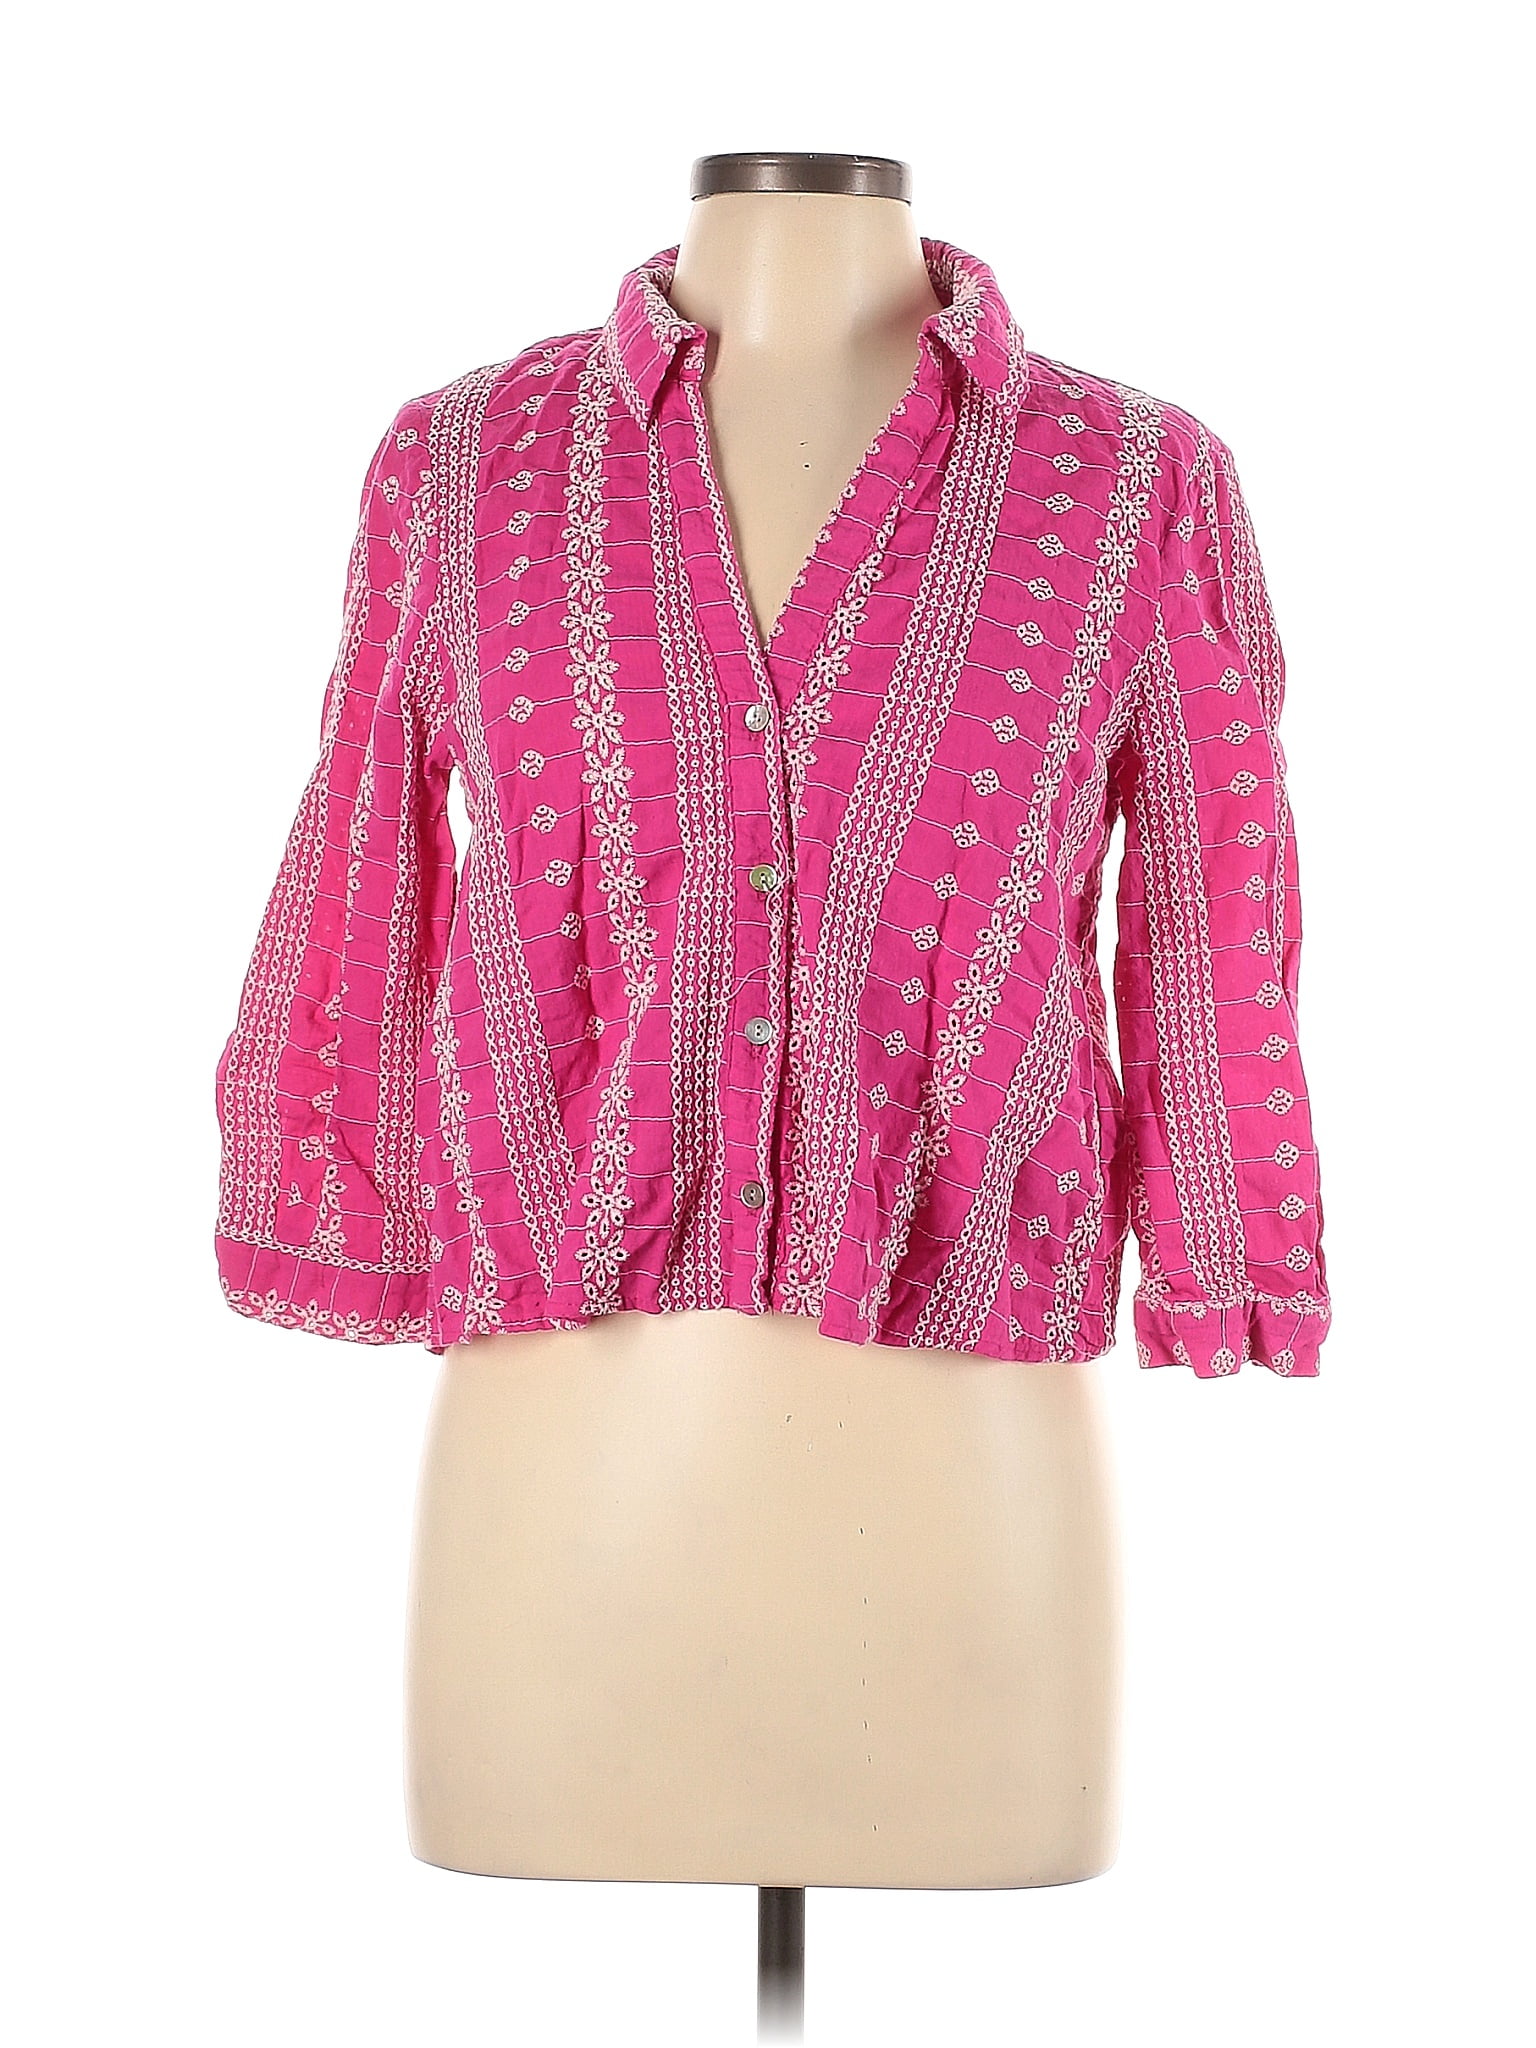 Zara 100% Cotton Pink Short Sleeve Top Size L - 75% off